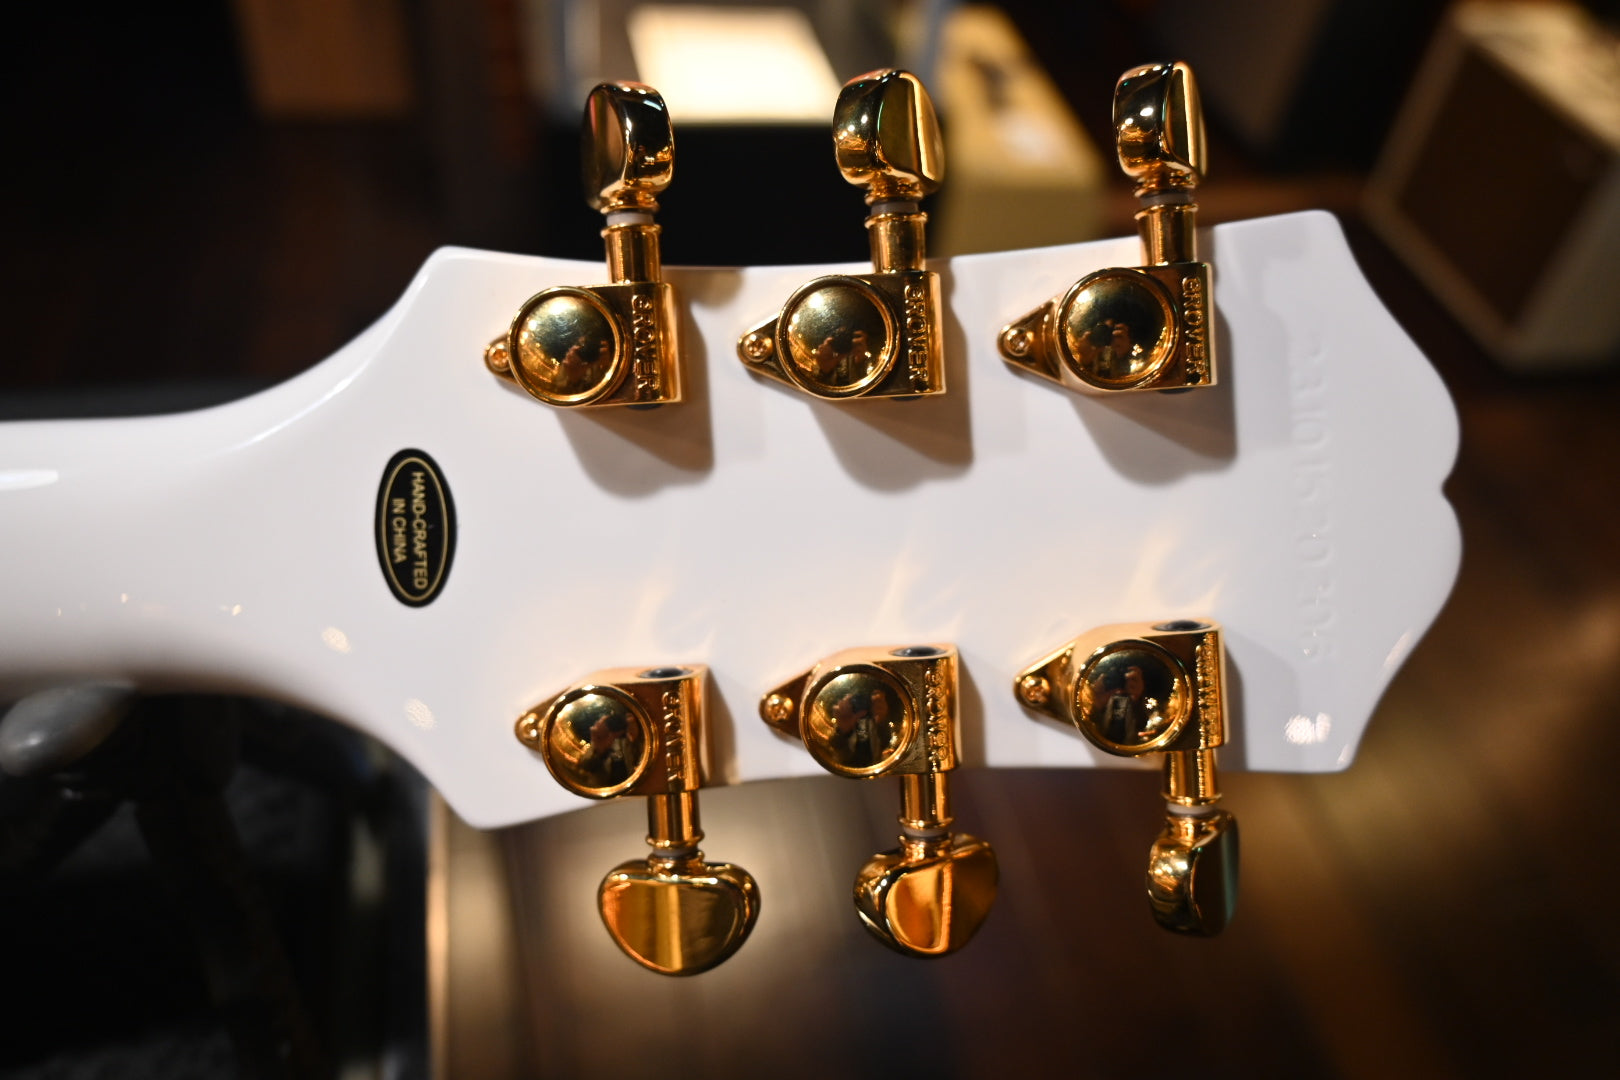 Epiphone Les Paul Custom - Alpine White Guitar #0206 - Danville Music